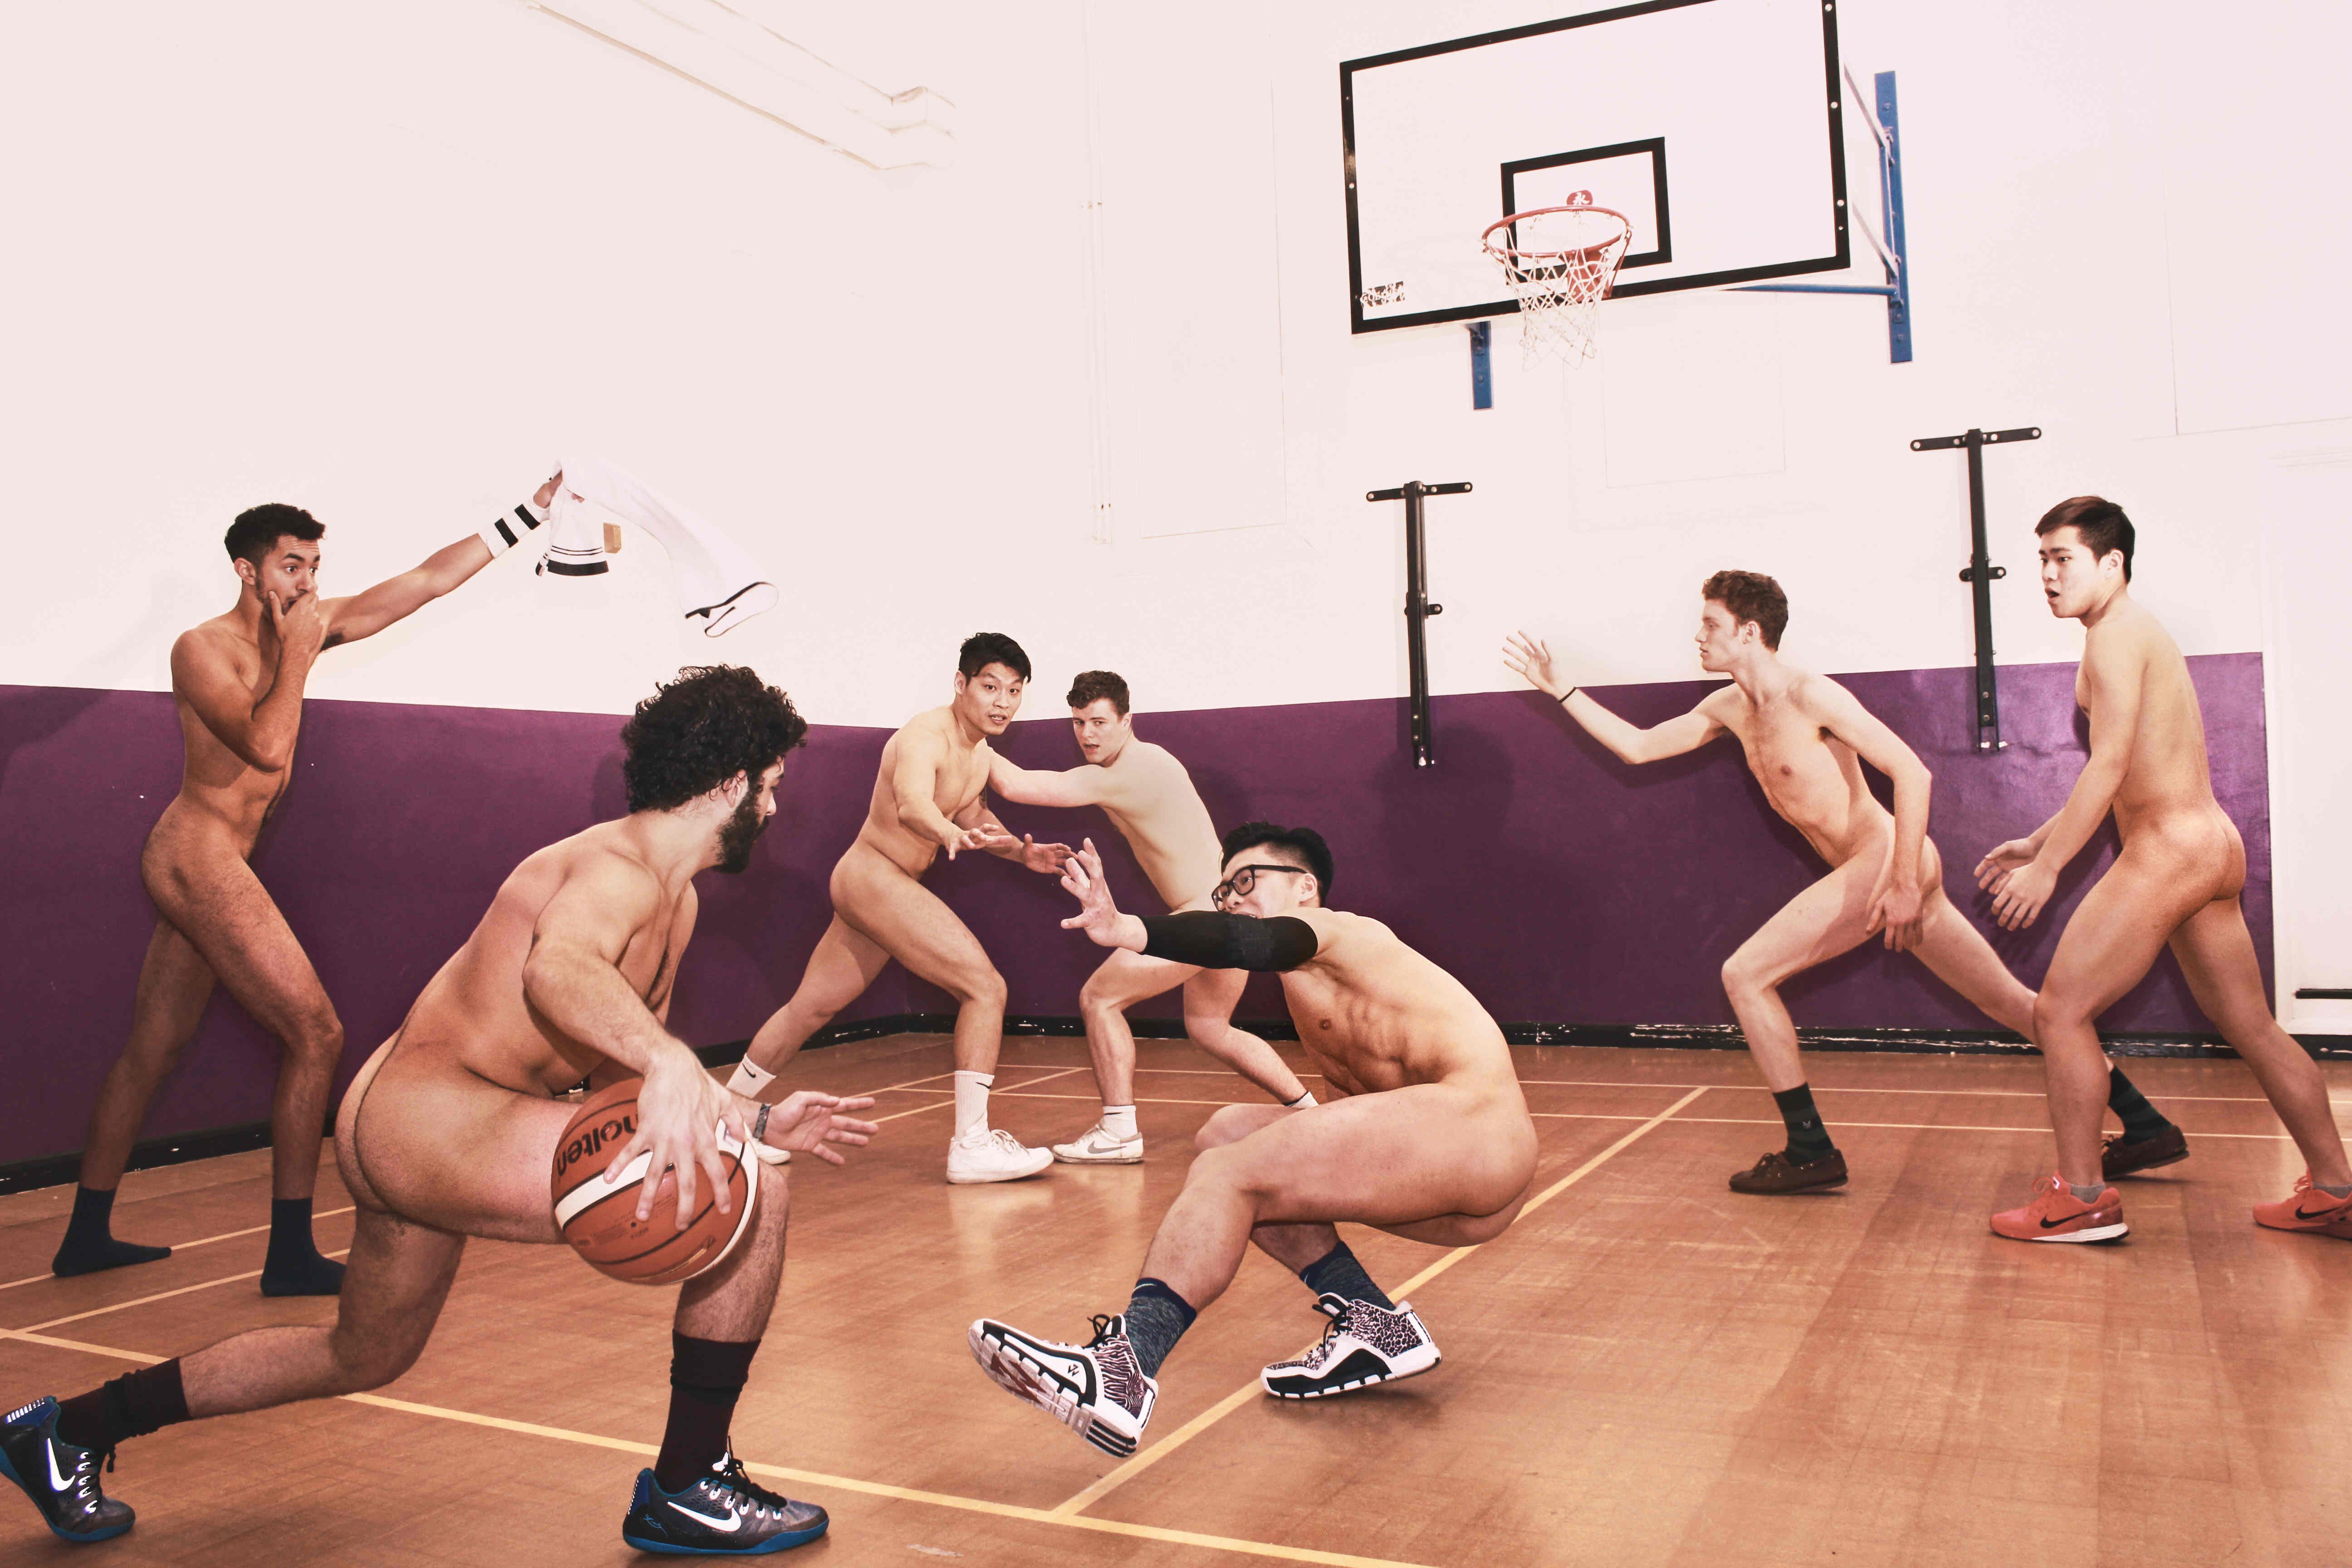 парни играют в баскетбол голые фото 2